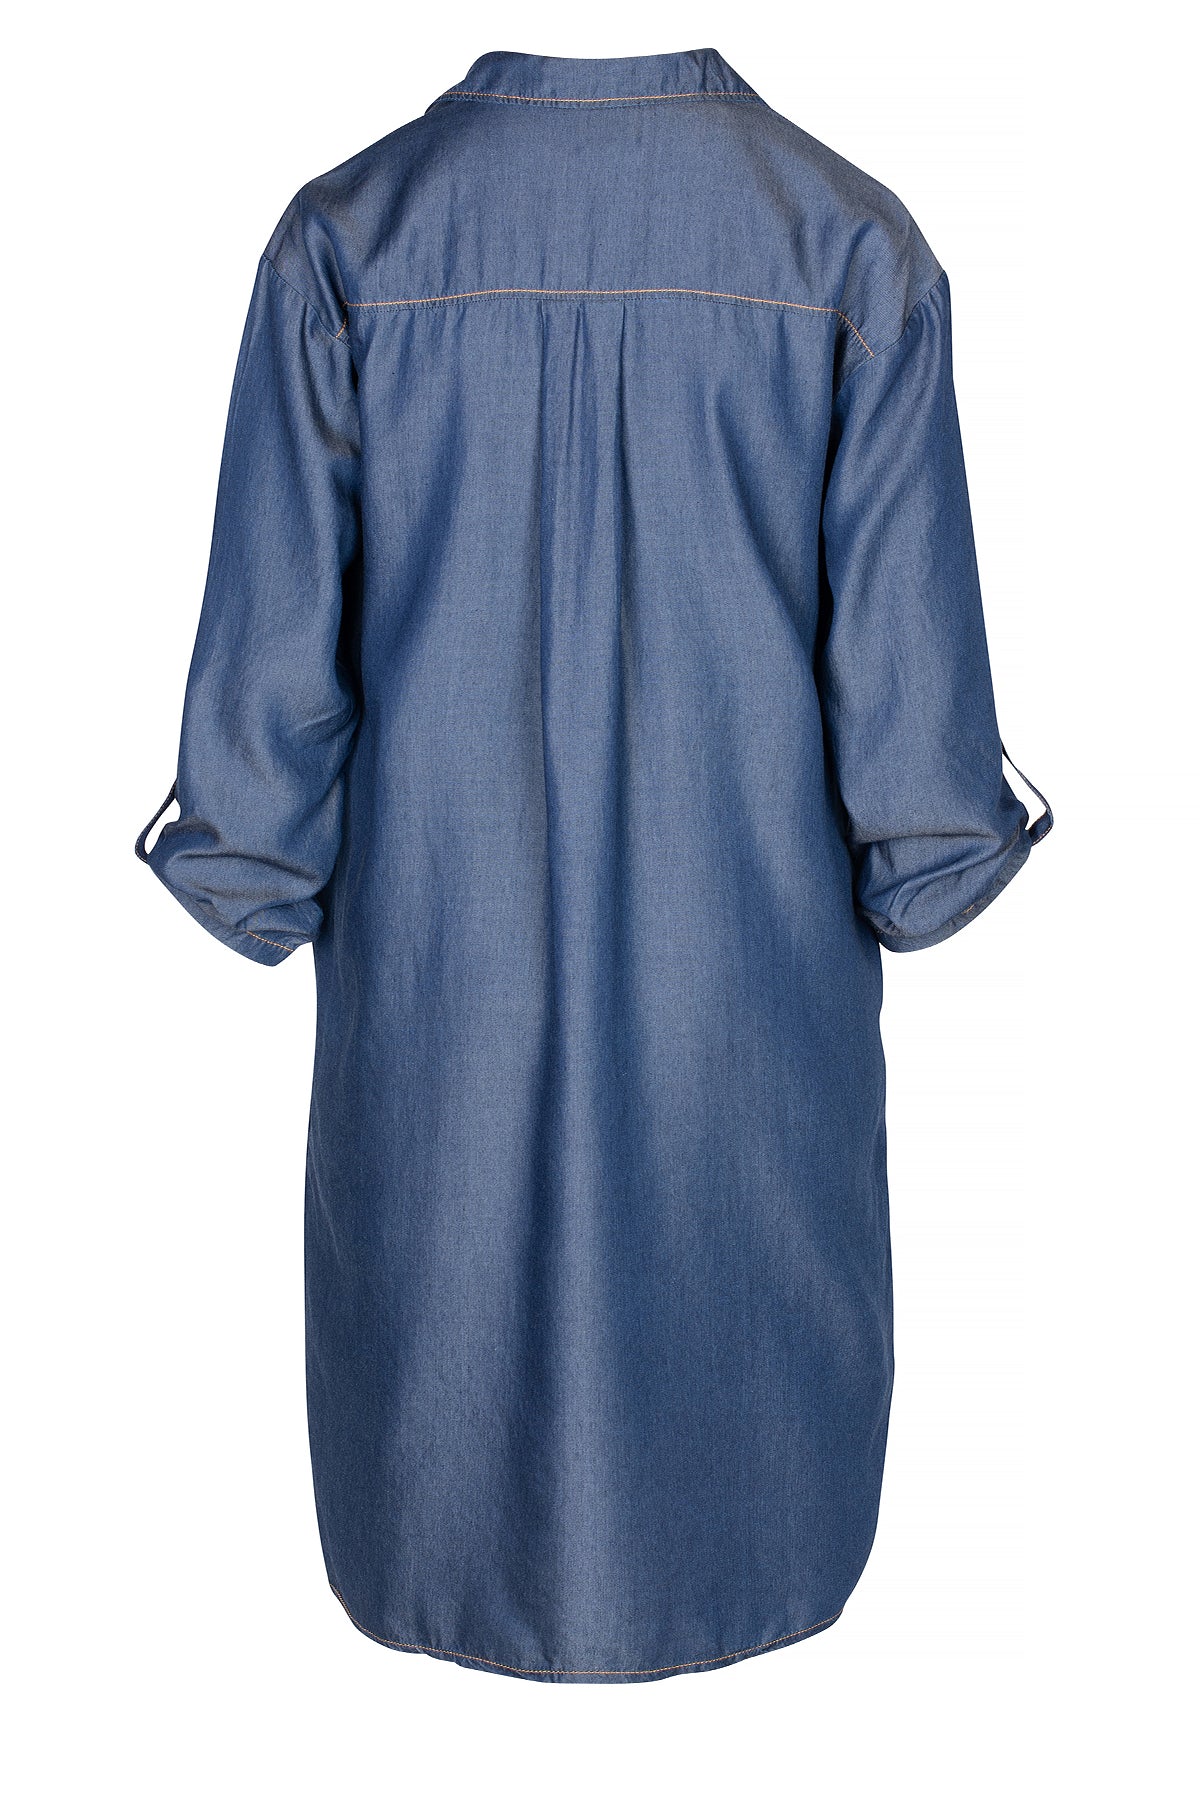 LUXZUZ // ONE TWO Osa Long Shirt Dress 541 Blue Indigo